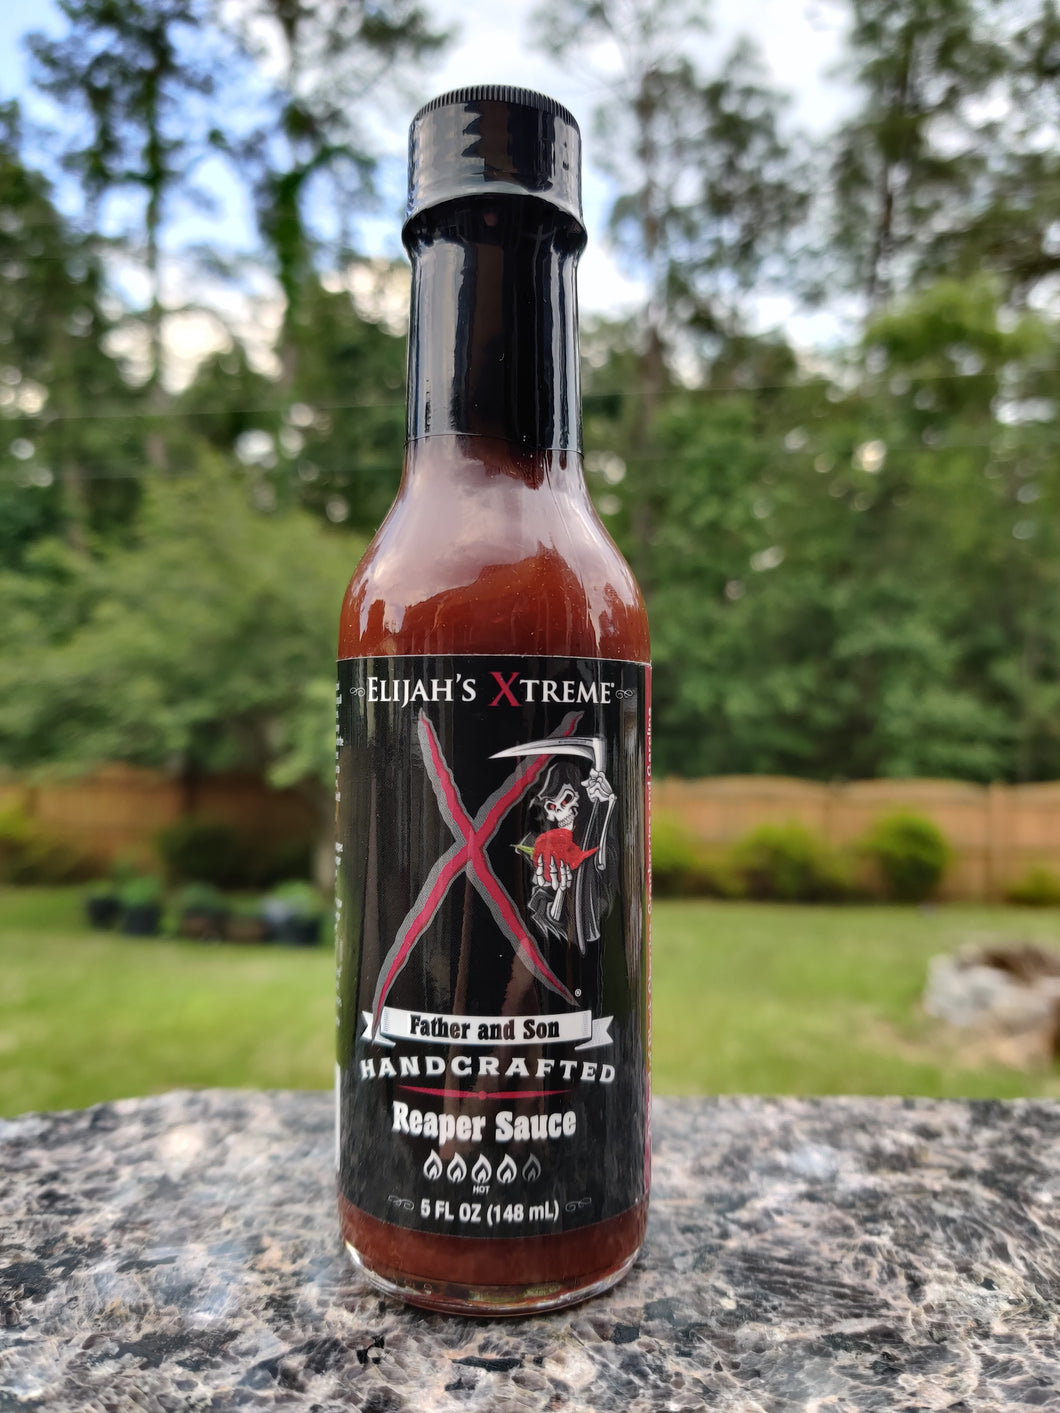 Elijah’s Xtreme Reaper Sauce